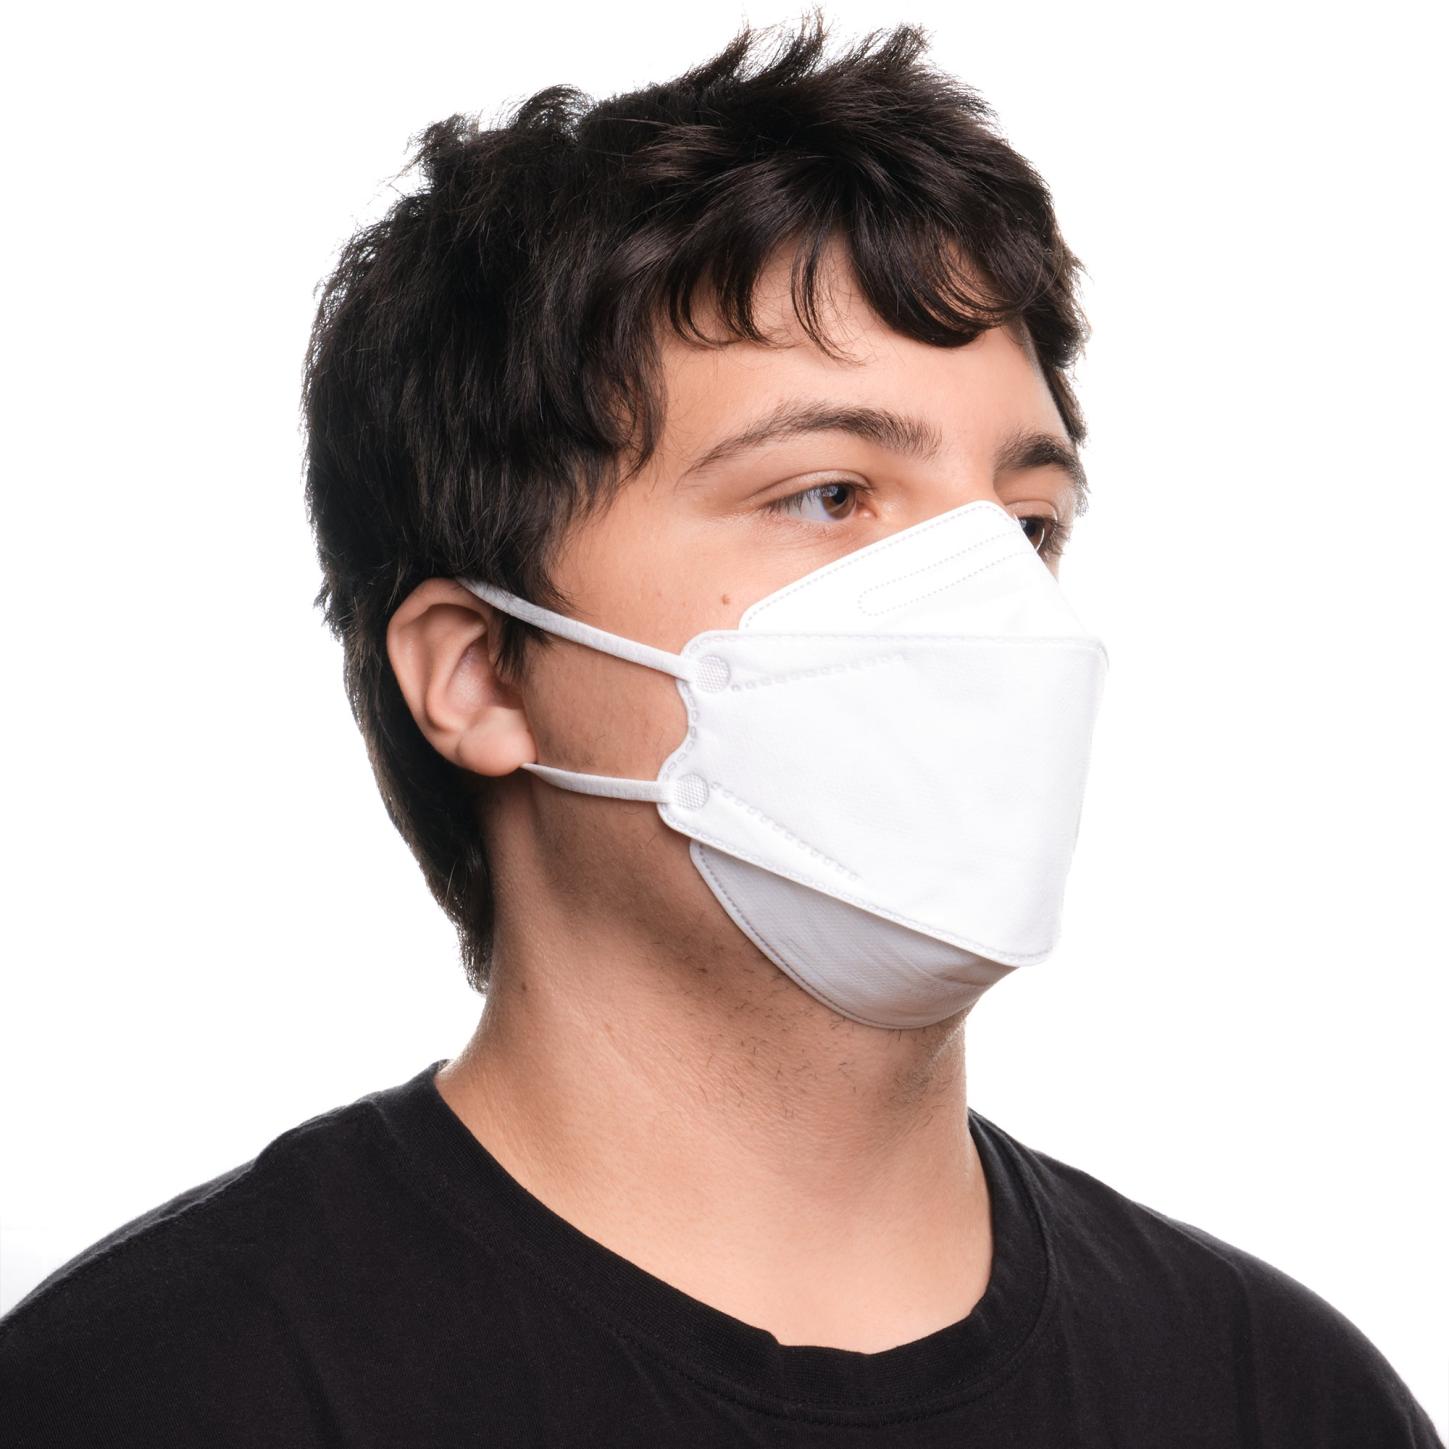 Mask Protective Health